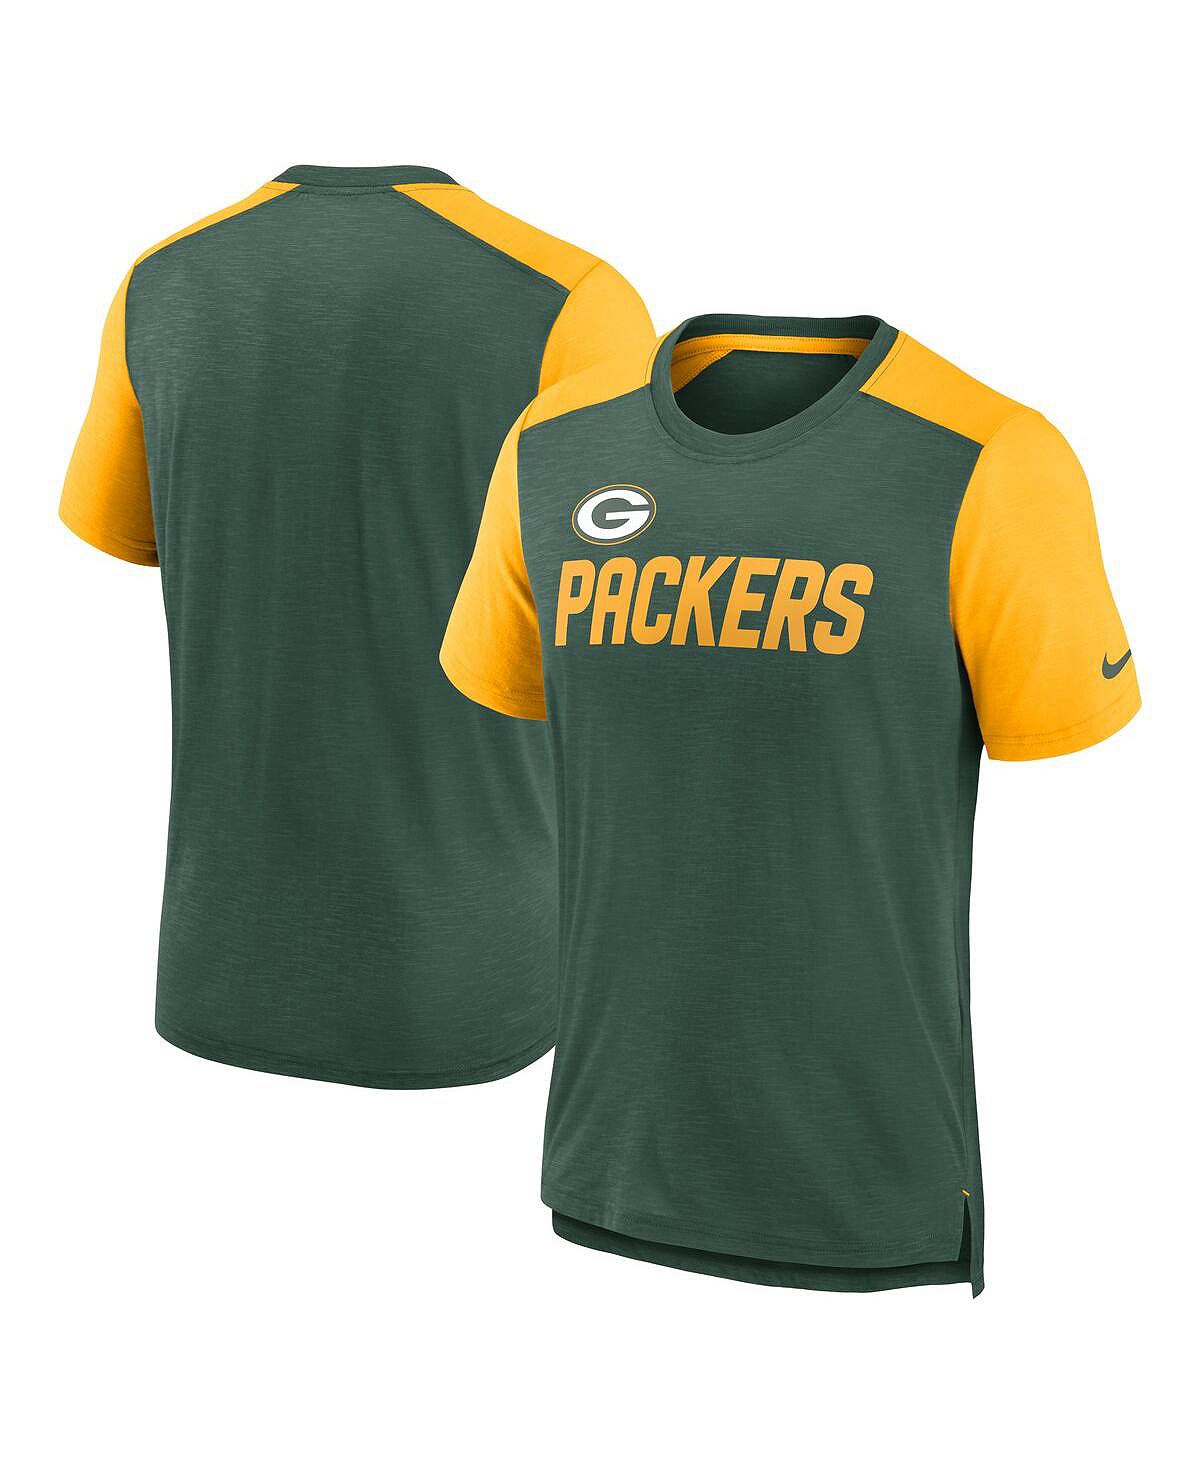 Мужская футболка с названием команды Green Bay Packers в стиле колор-блок, зеленая, золотистая с меланжевым отливом Nike printio кепка green bay packers